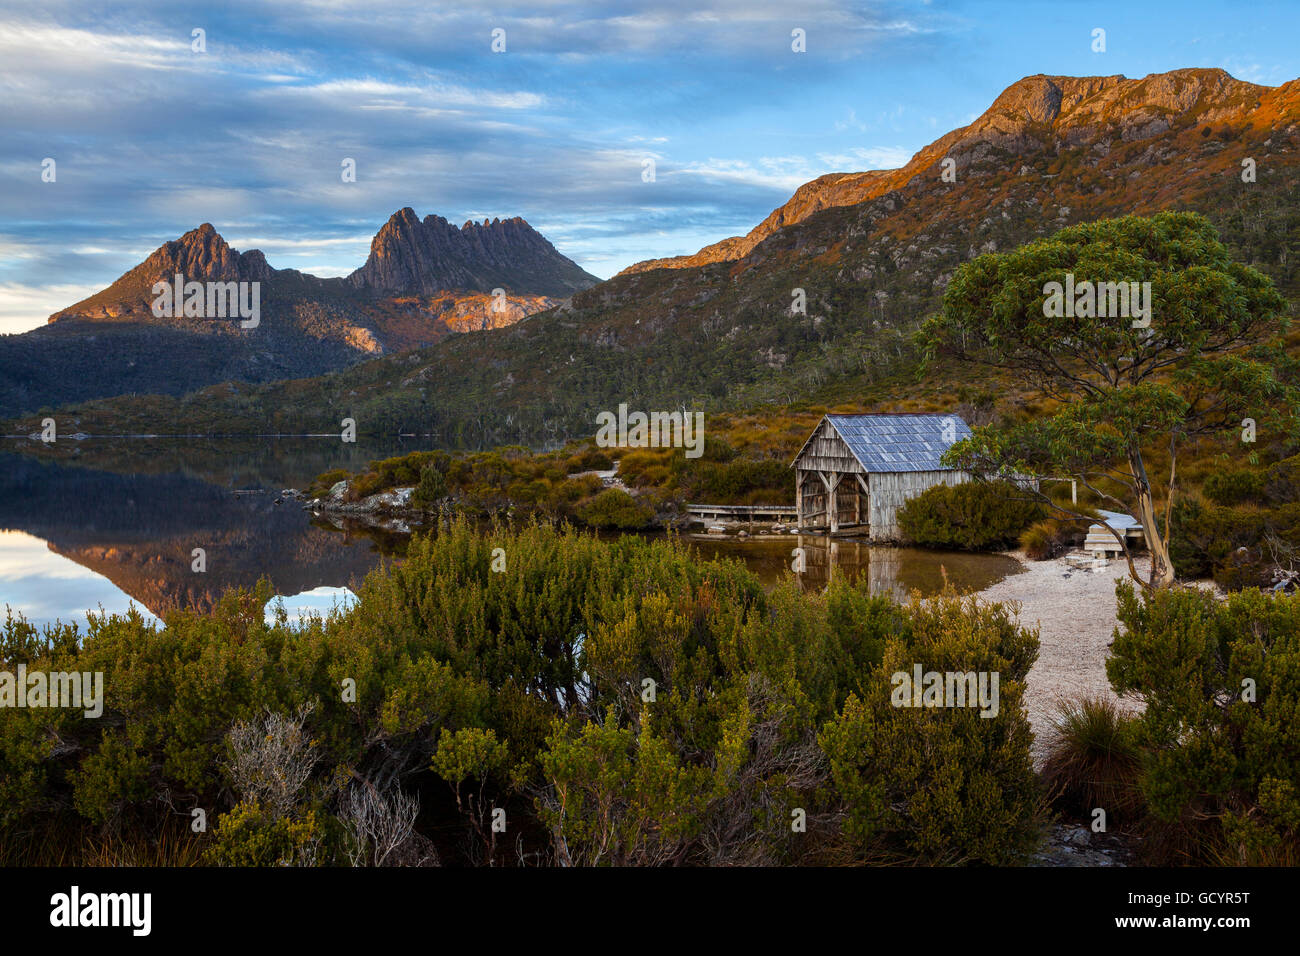 Cradle Mountain und Dove Lake Boatshed im Morgengrauen - Wiege Mtn Lake St Clair N.P - Tasmanien Stockfoto